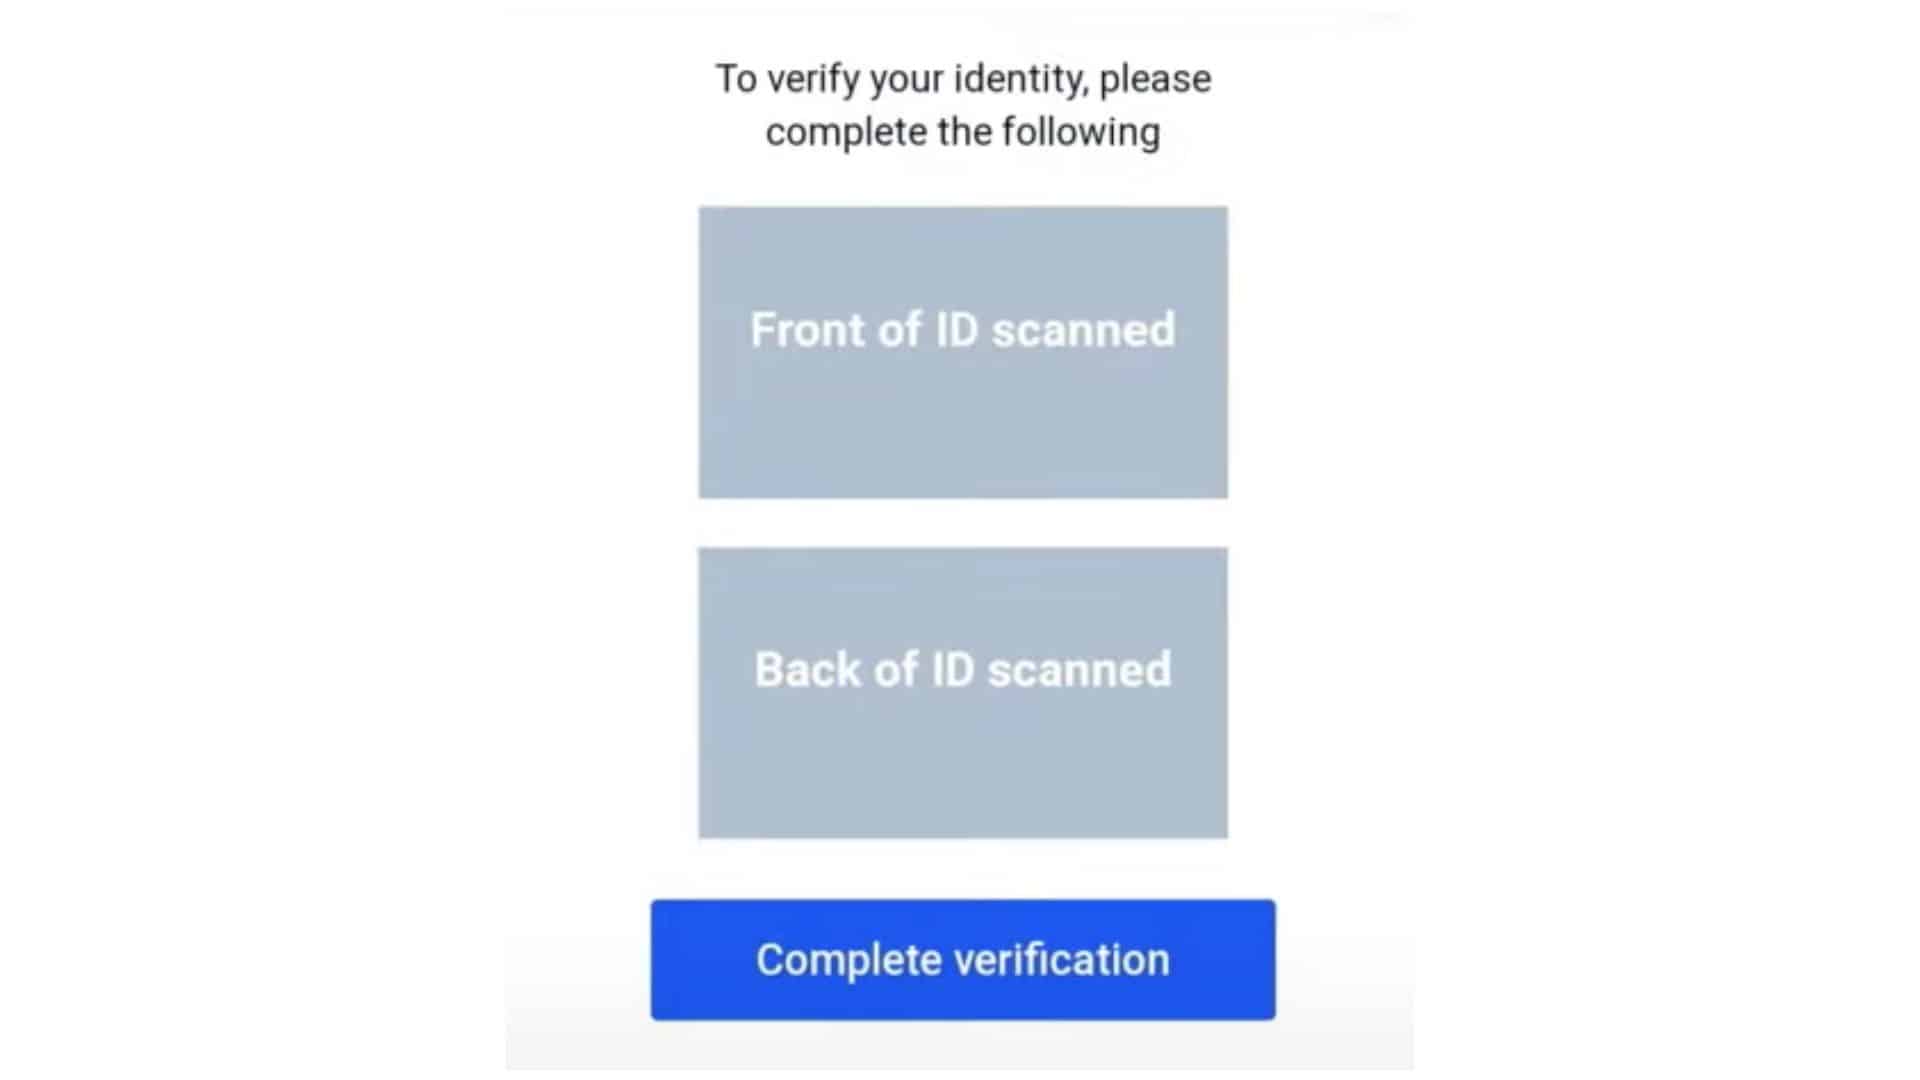 coinbase id verification time